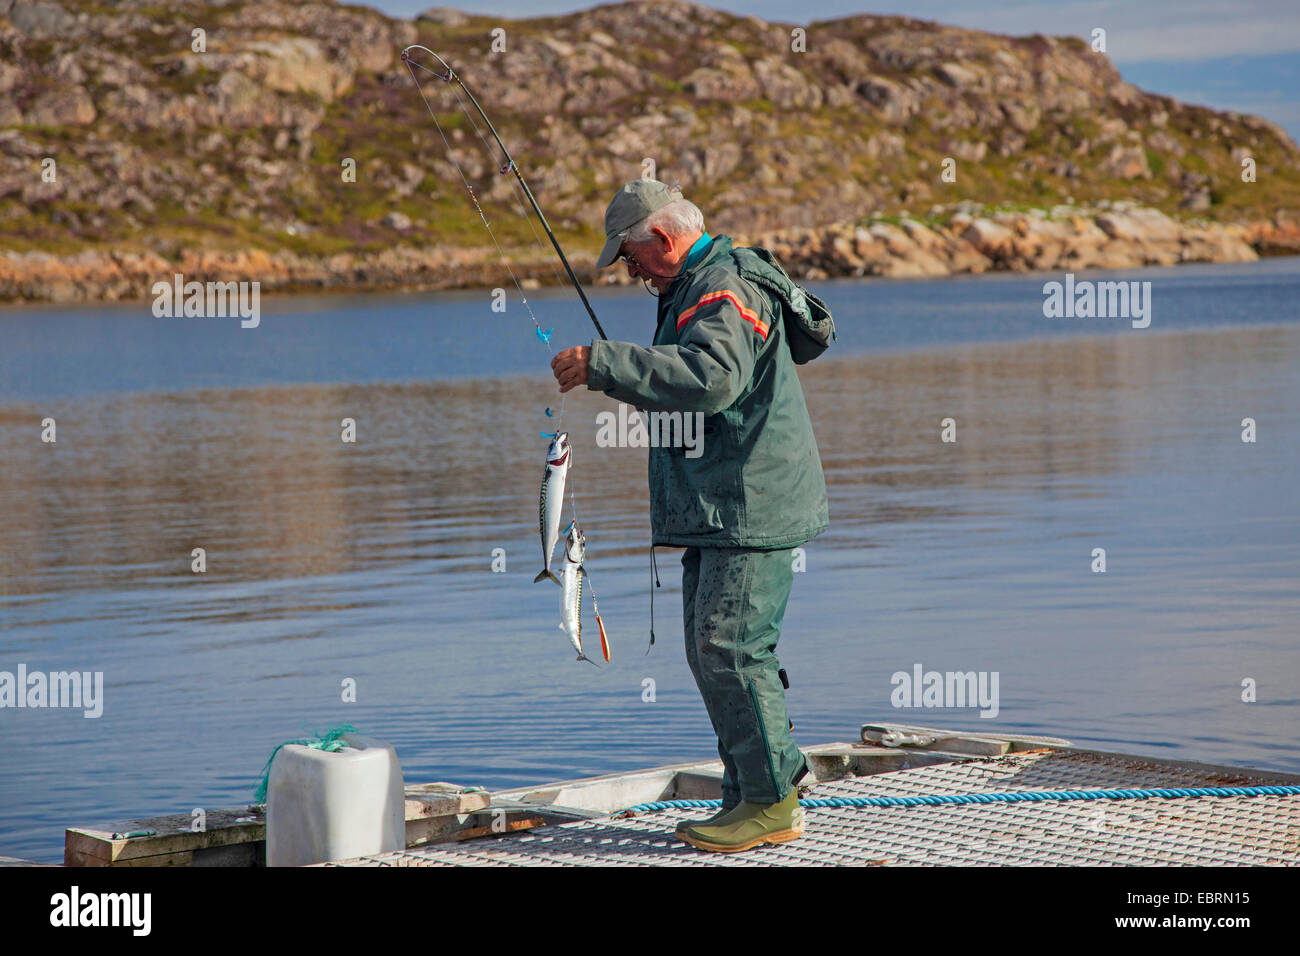 Atlantic mackerel, common mackerel (Scomber scombrus), angler fishing on boardwalk, Norway, Hitra Stock Photo